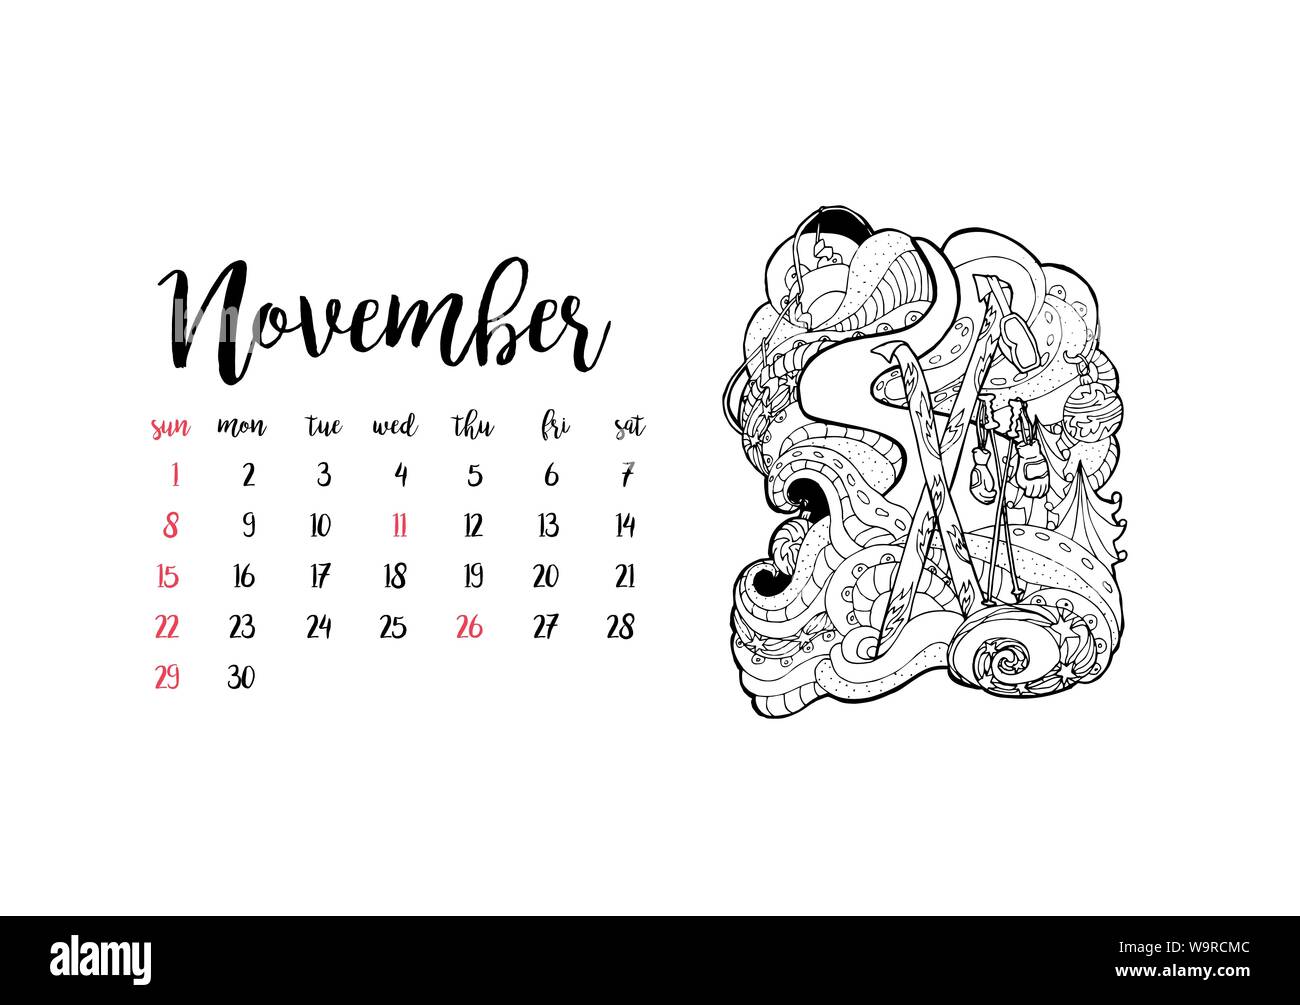 Monthly Desk Calendar Horizontal Template 2020 For Month November